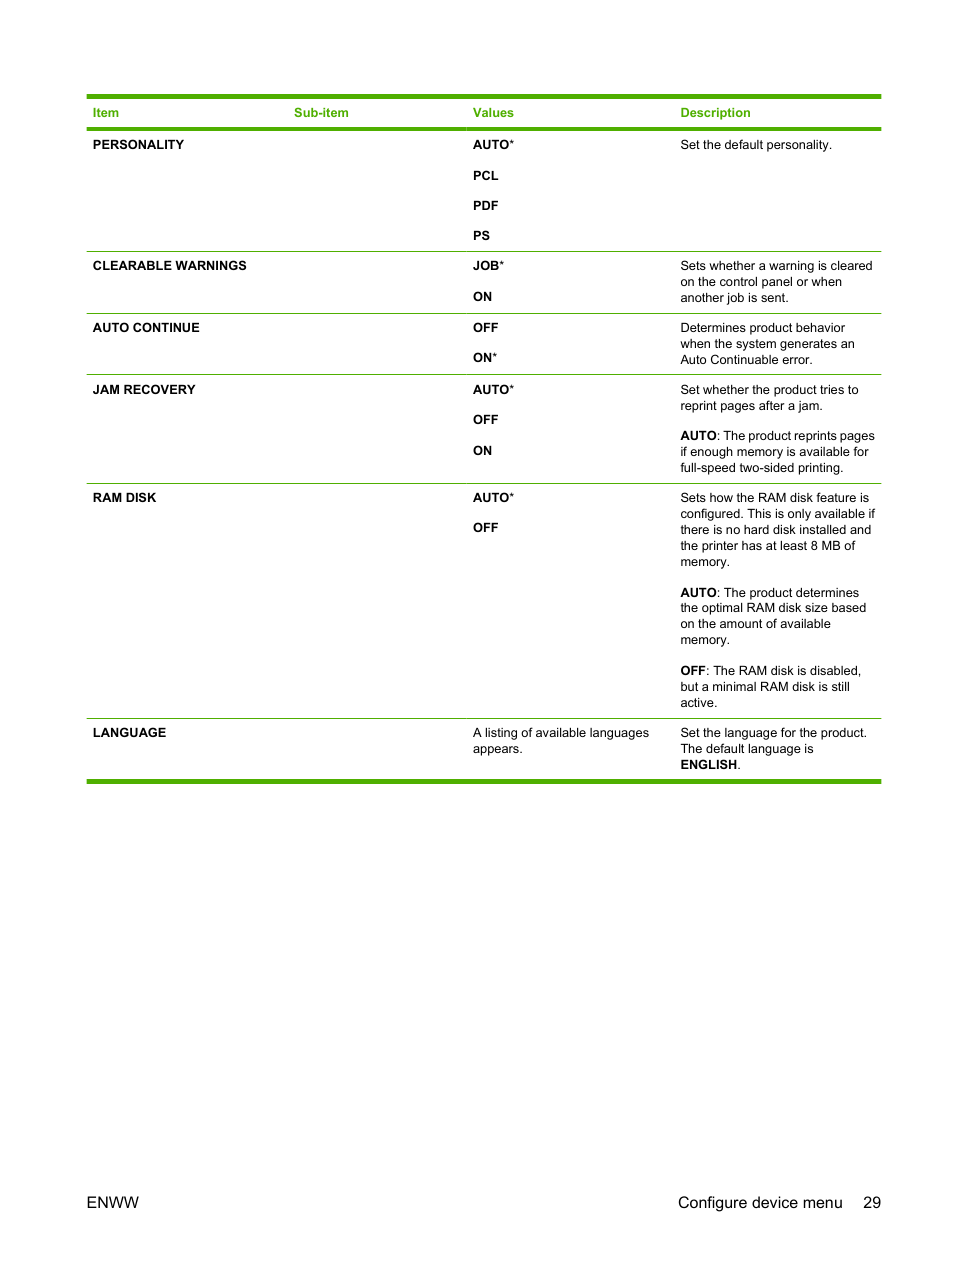 Enww configure device menu 29 | HP Laserjet p3015 User Manual | Page 41